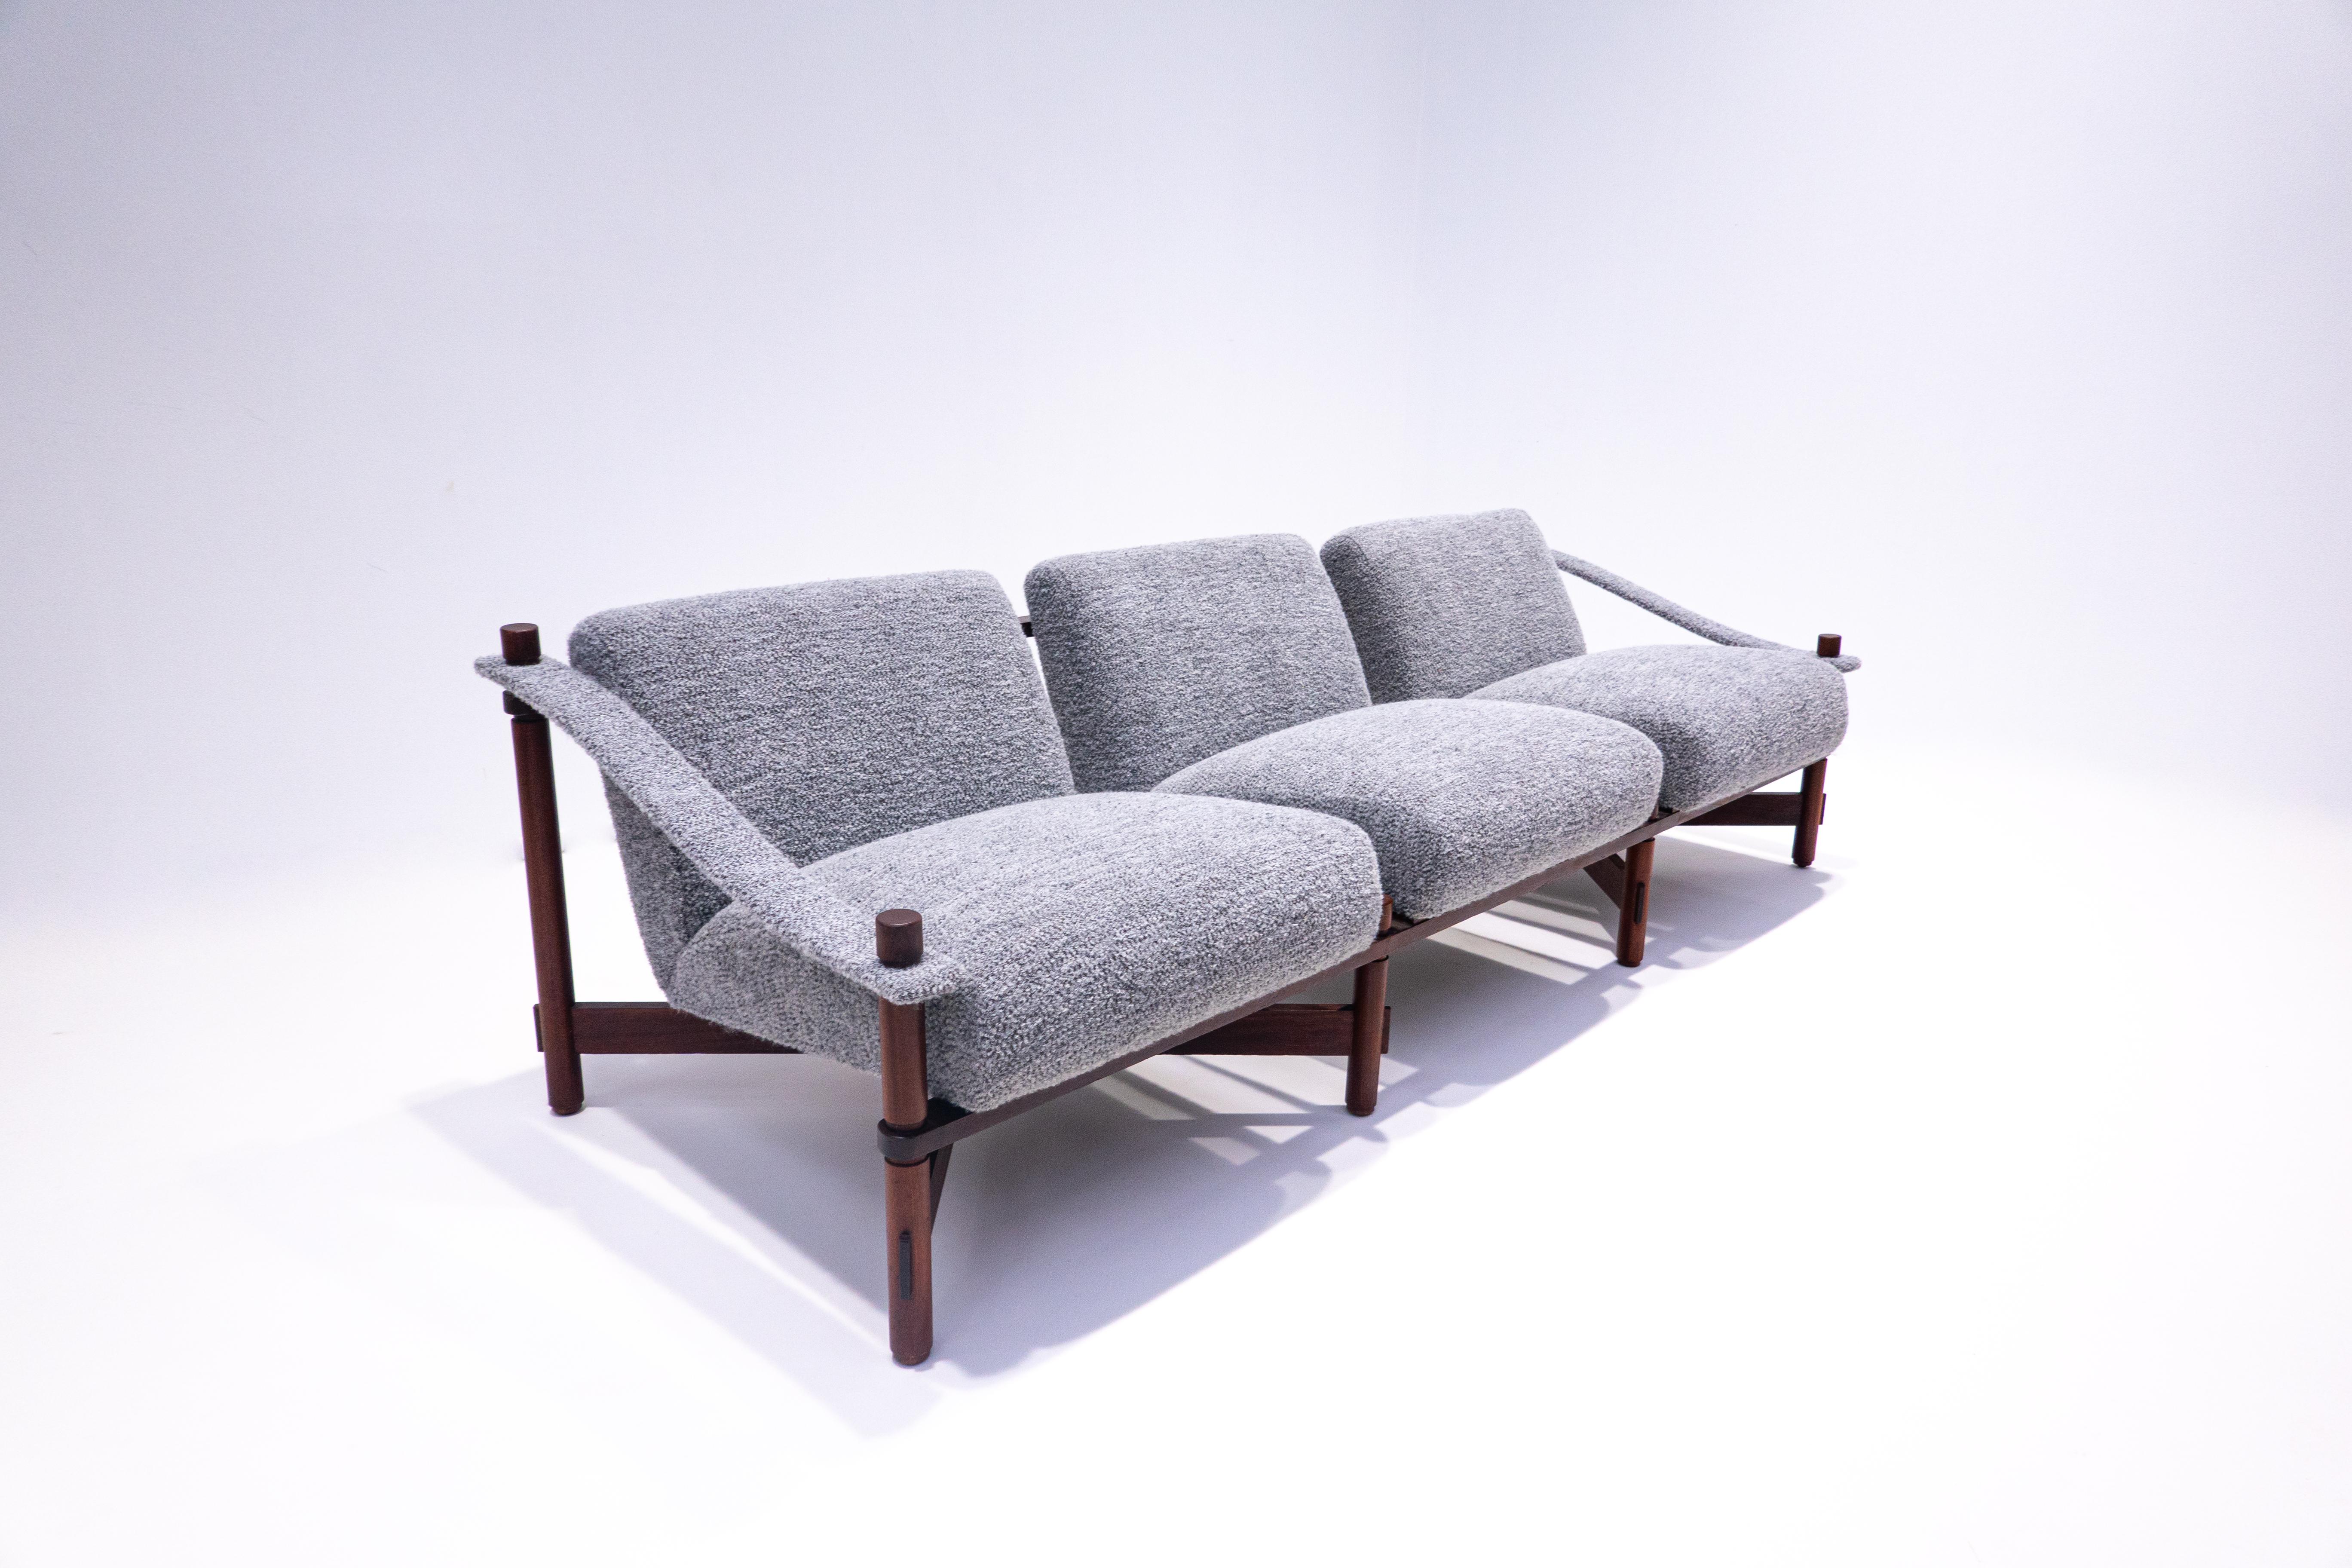 Mid-Century Modern grey sofa by Raffaella Crespi, Italy, 1960s
New Upholstery.